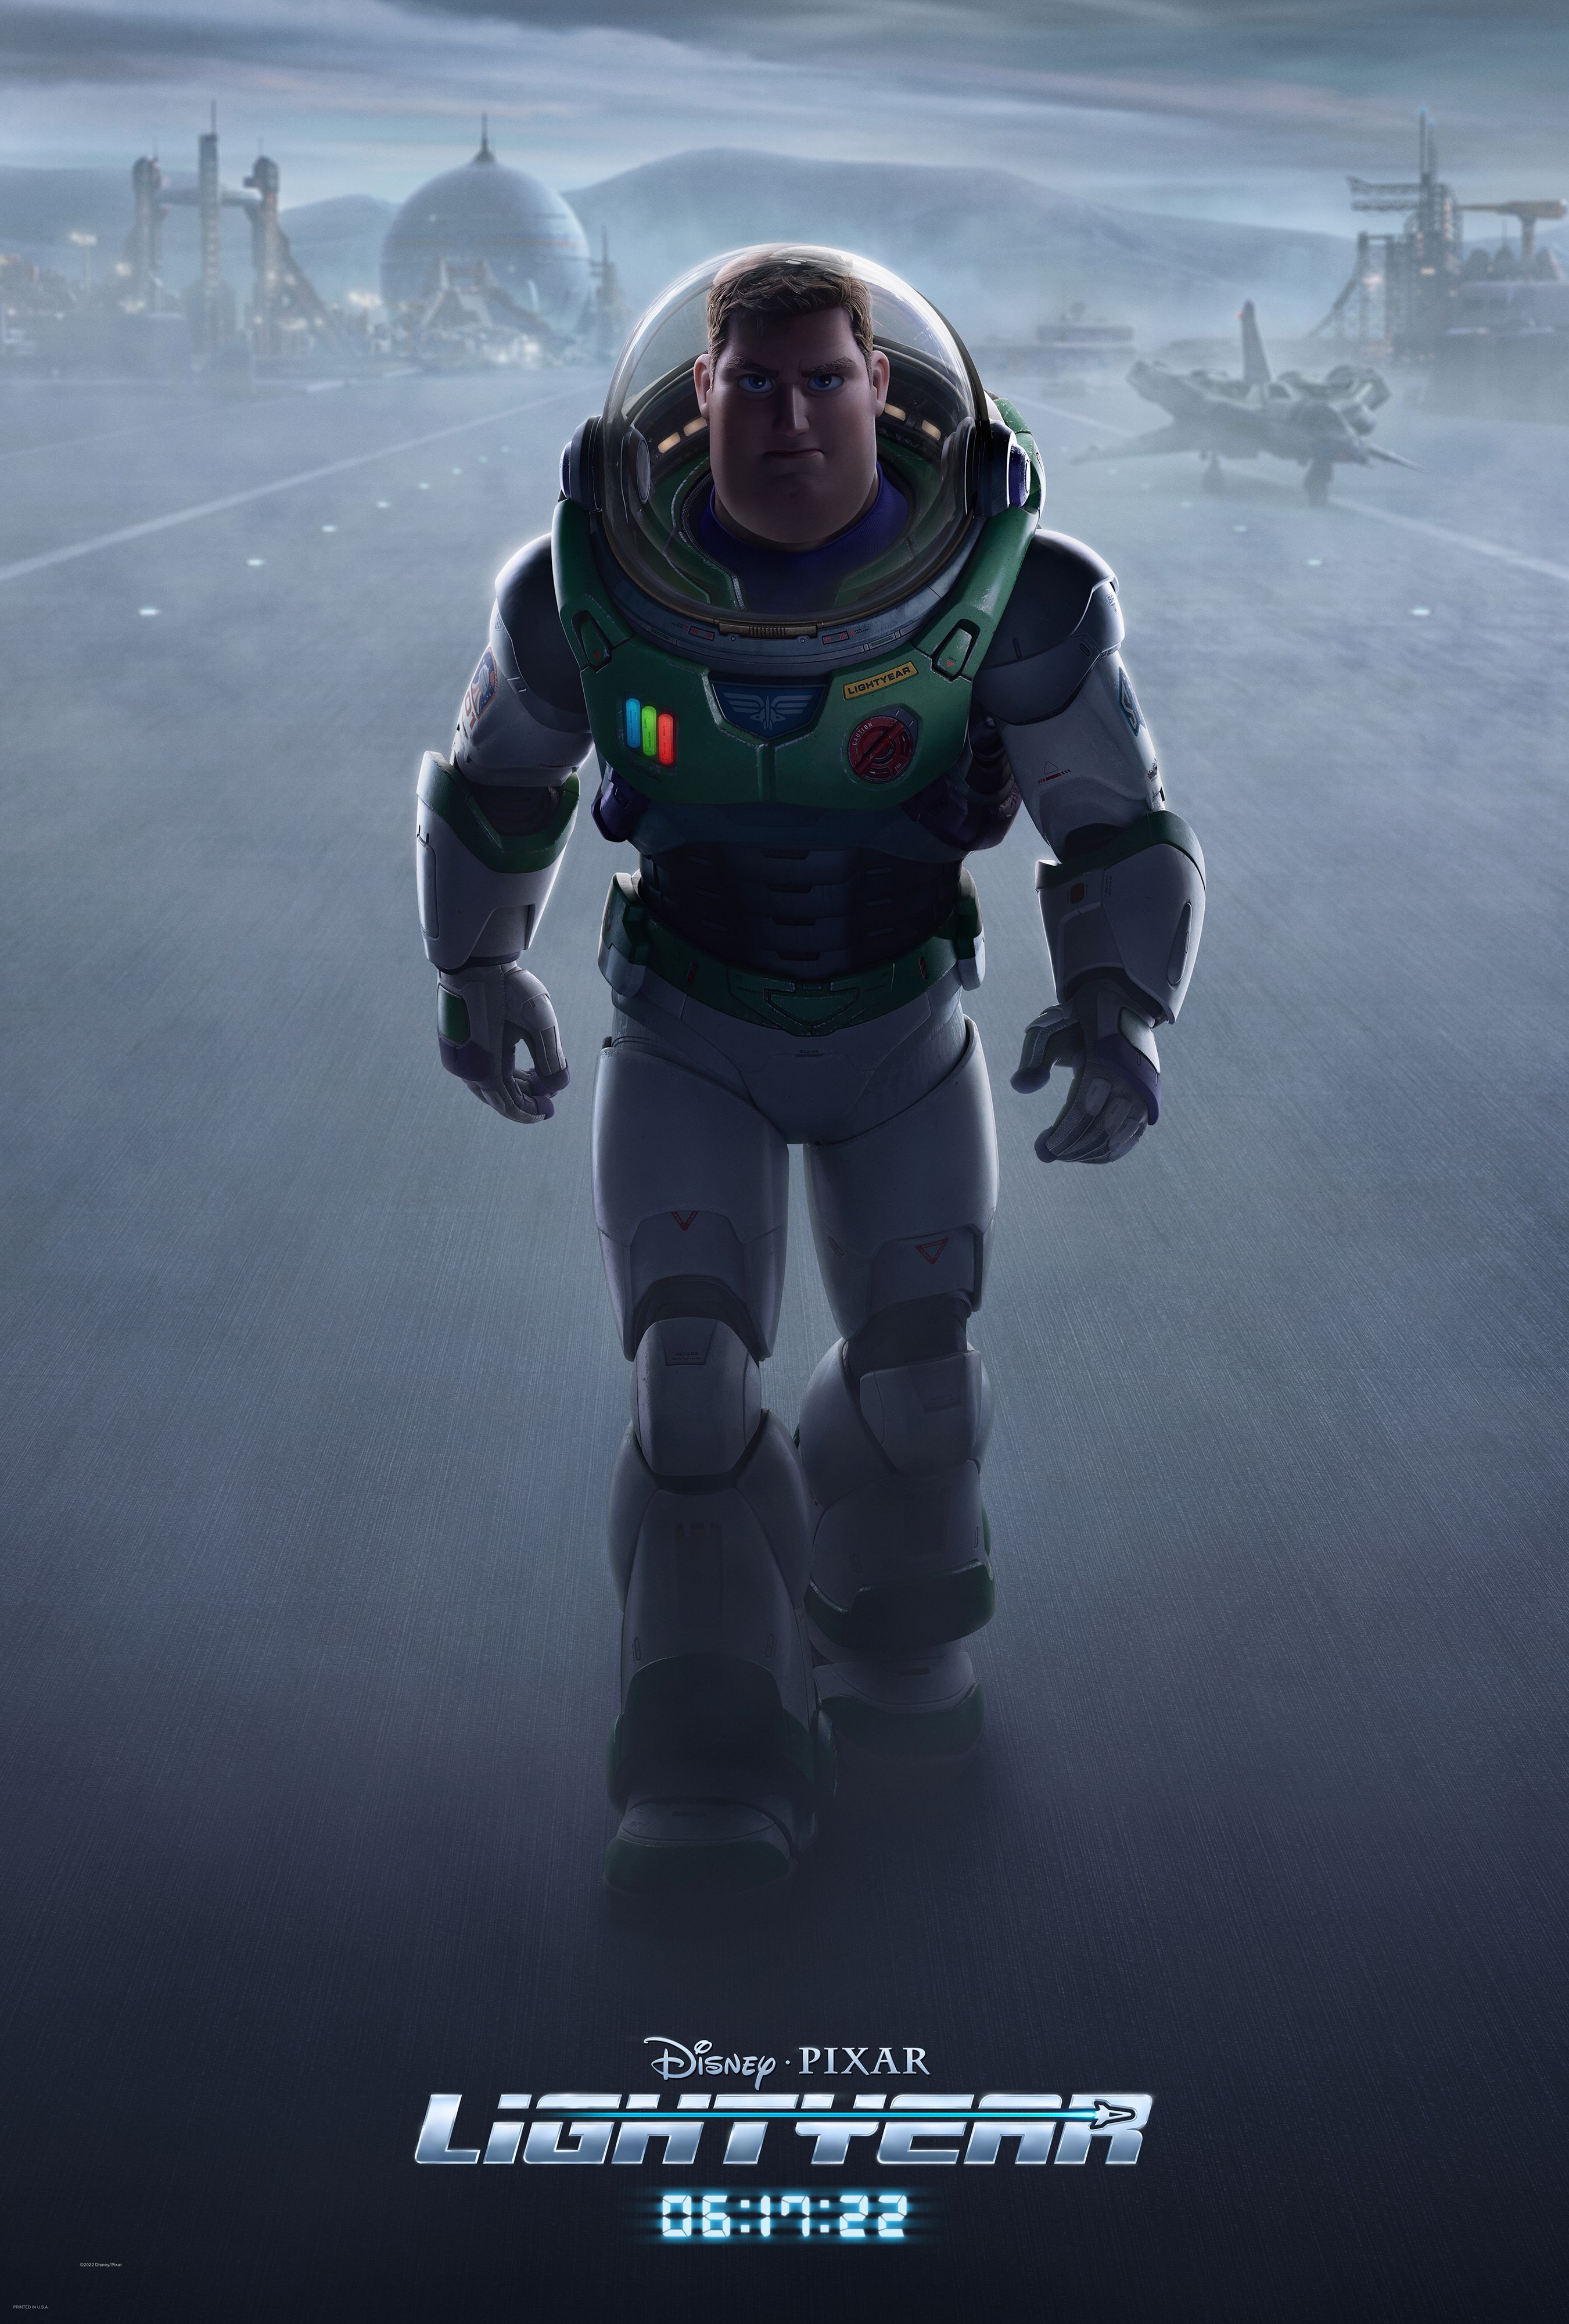 Lightyear Poster & Images Reveal Chris Evans' Space Ranger Team